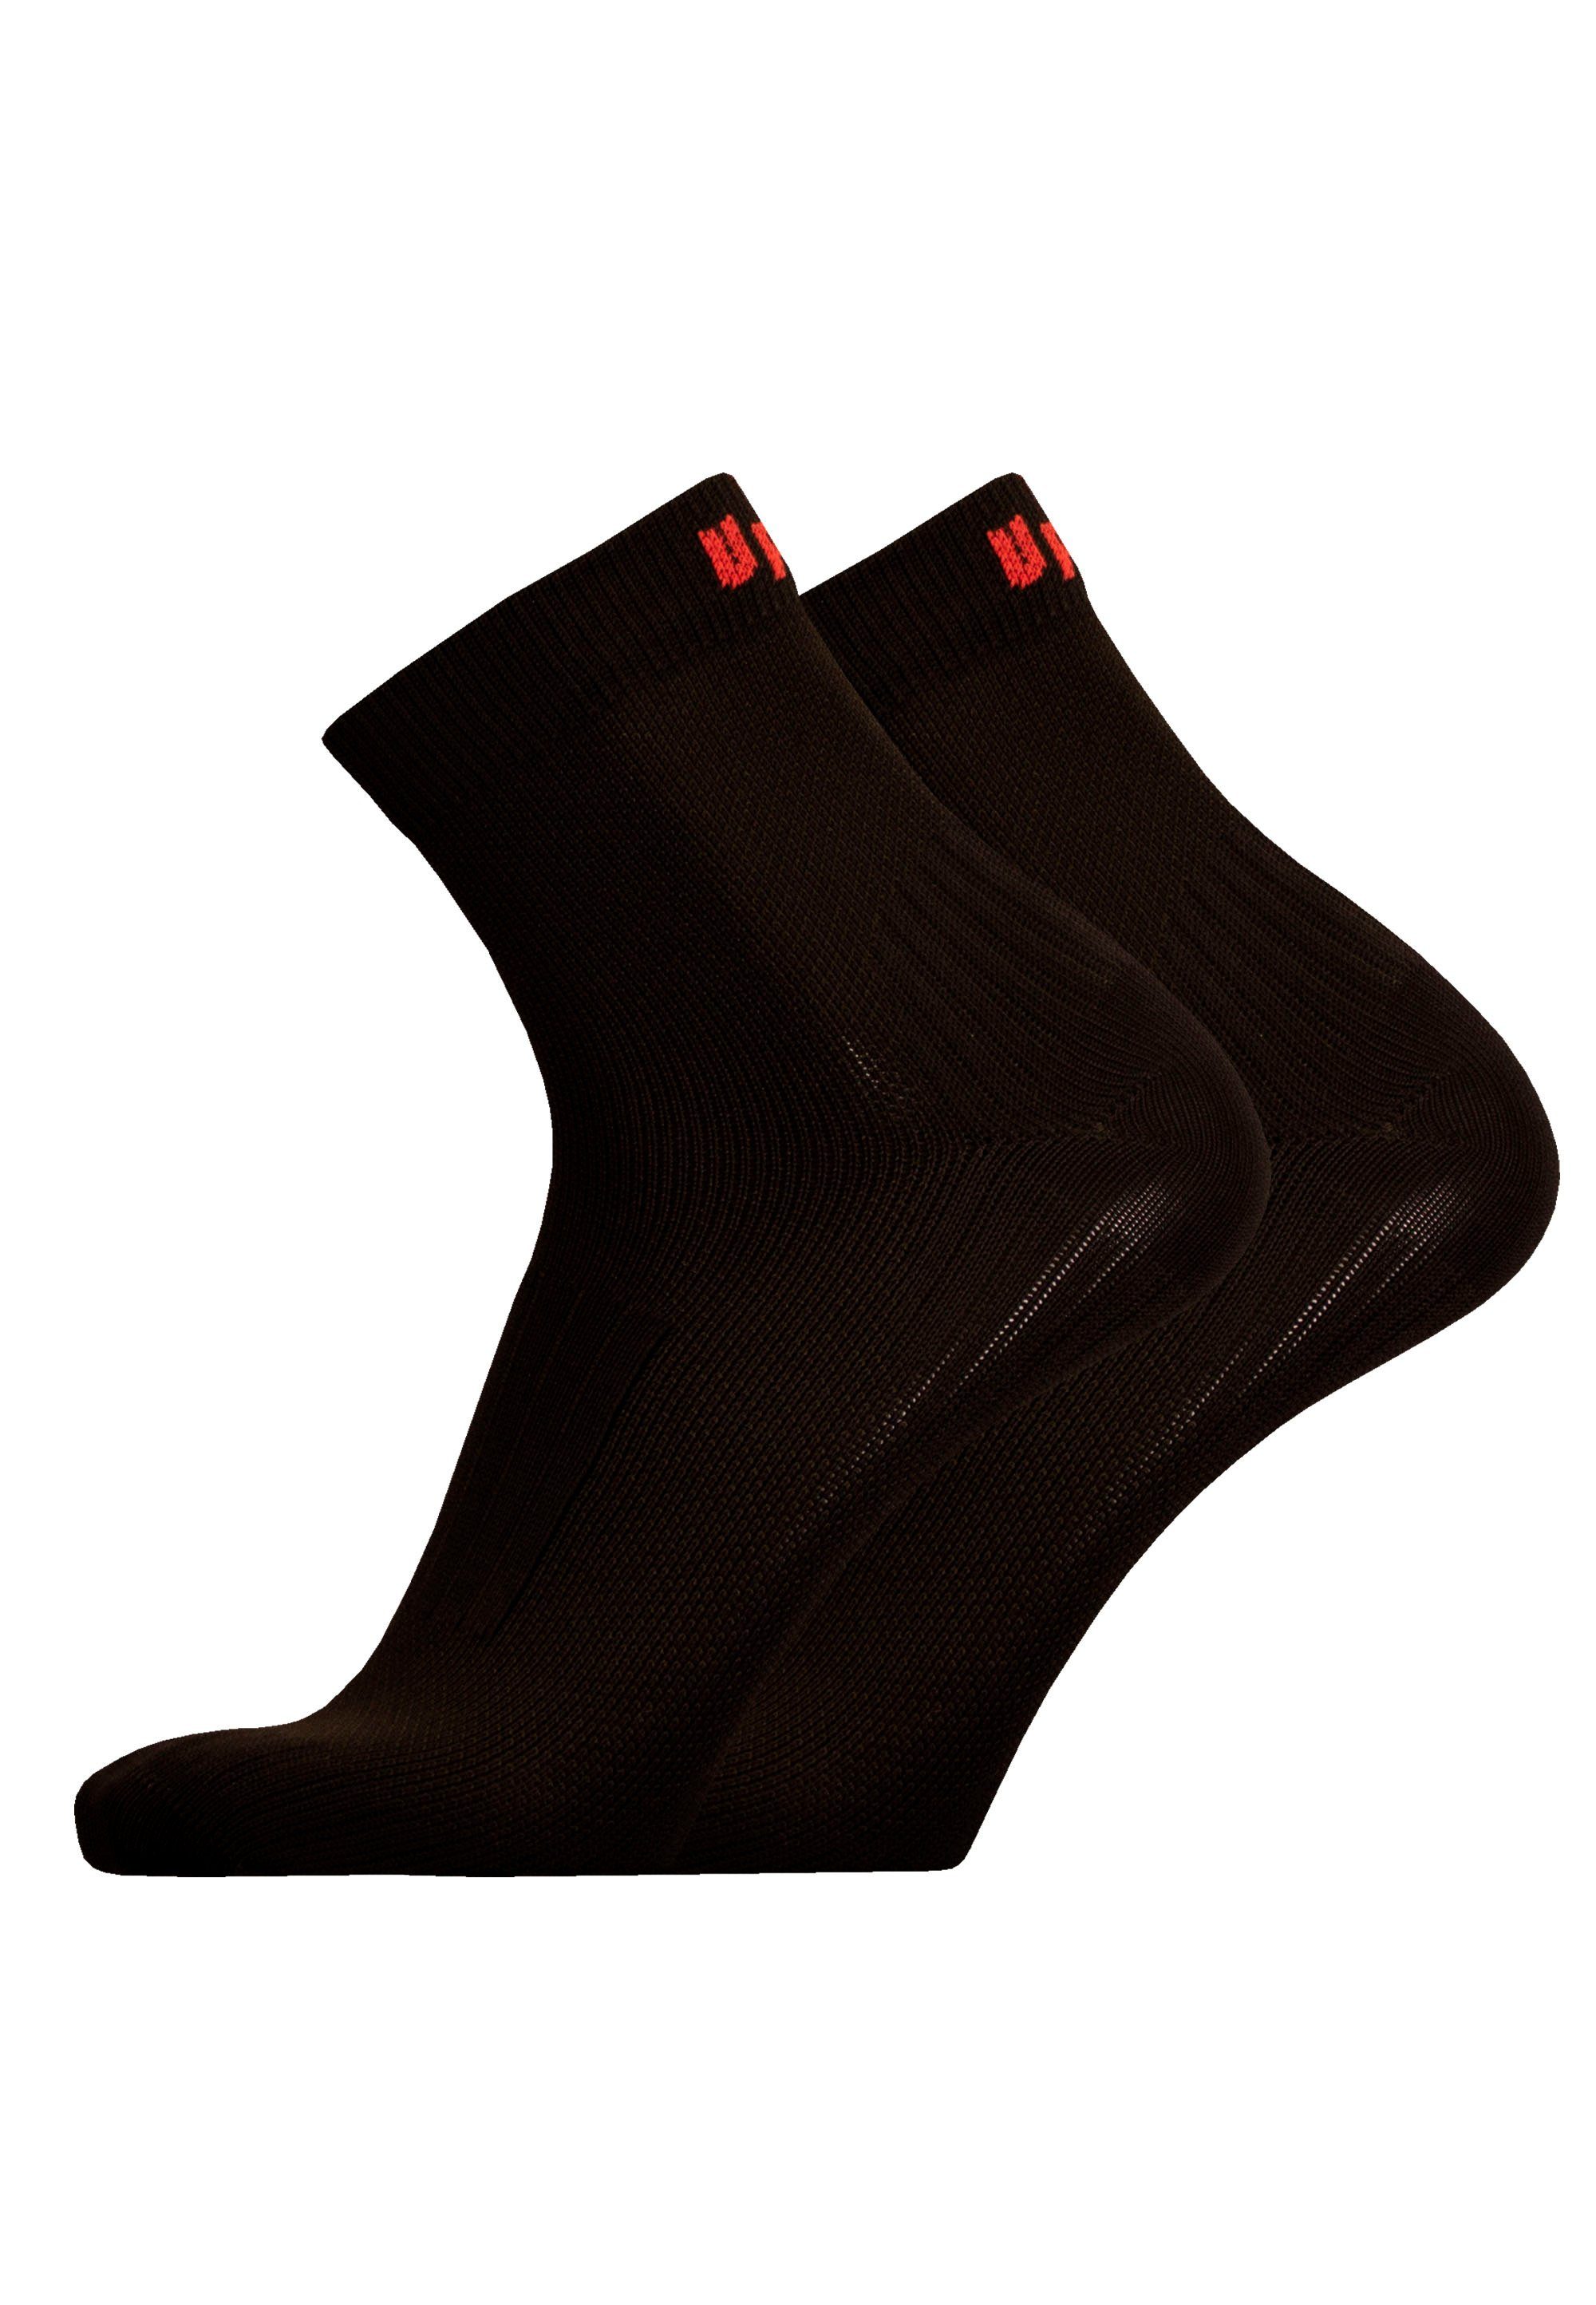 UphillSport Socken schwarz gepolstertem FRONT mit Pack (2-Paar) Rist 2er